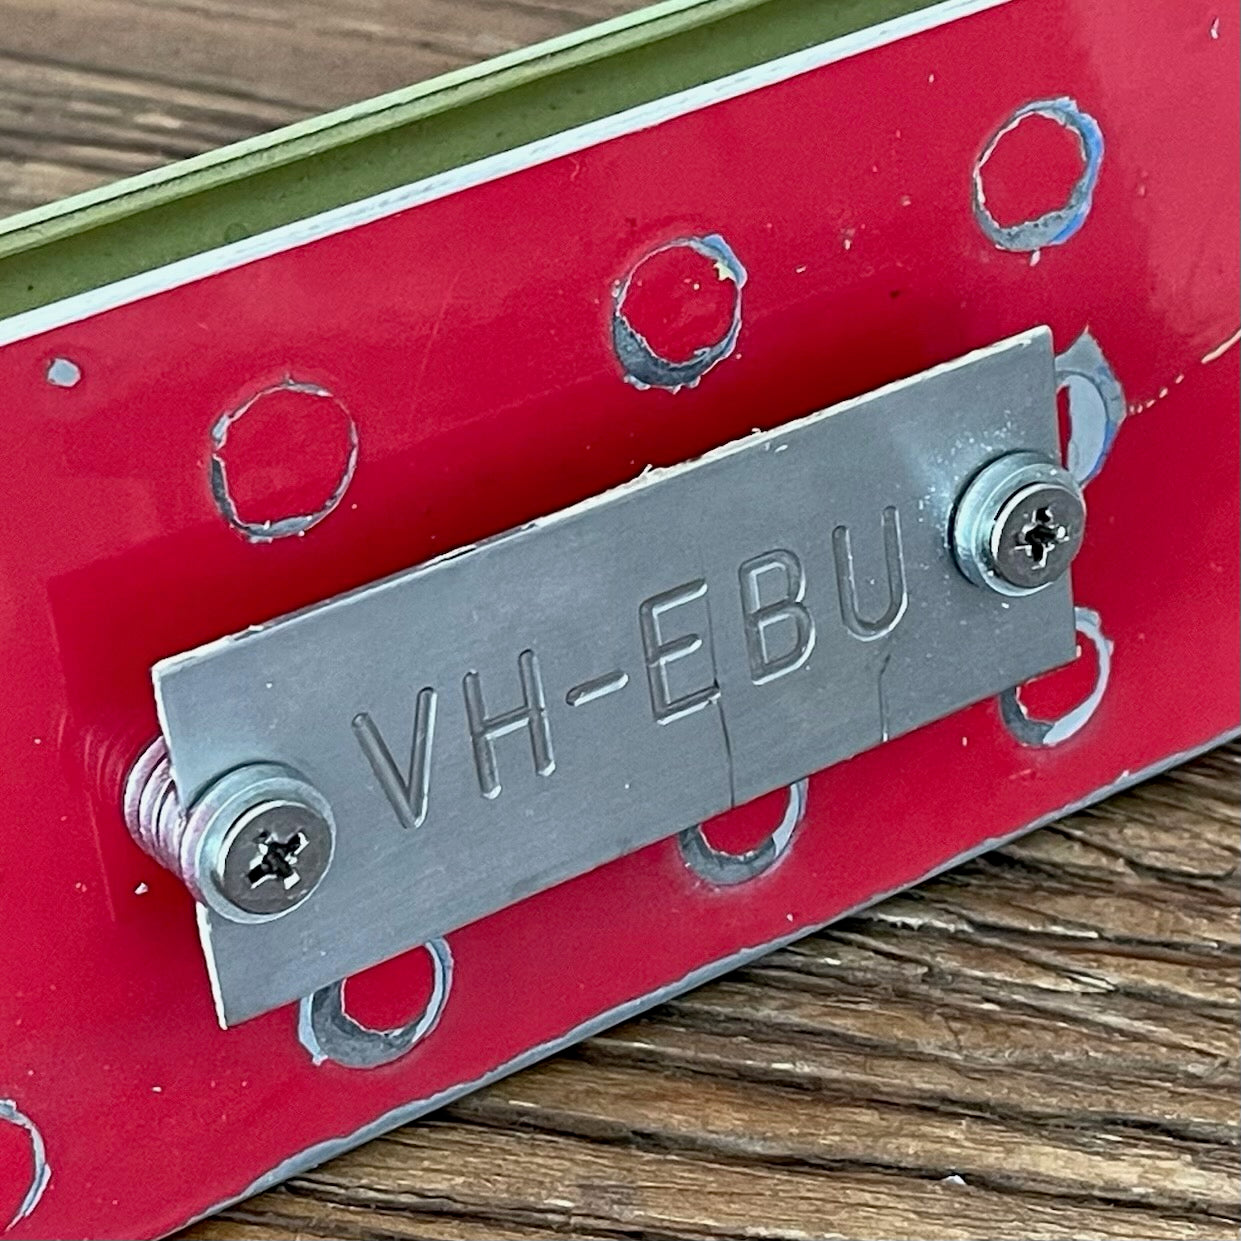 Non-destructable registration plate - VH-EBU